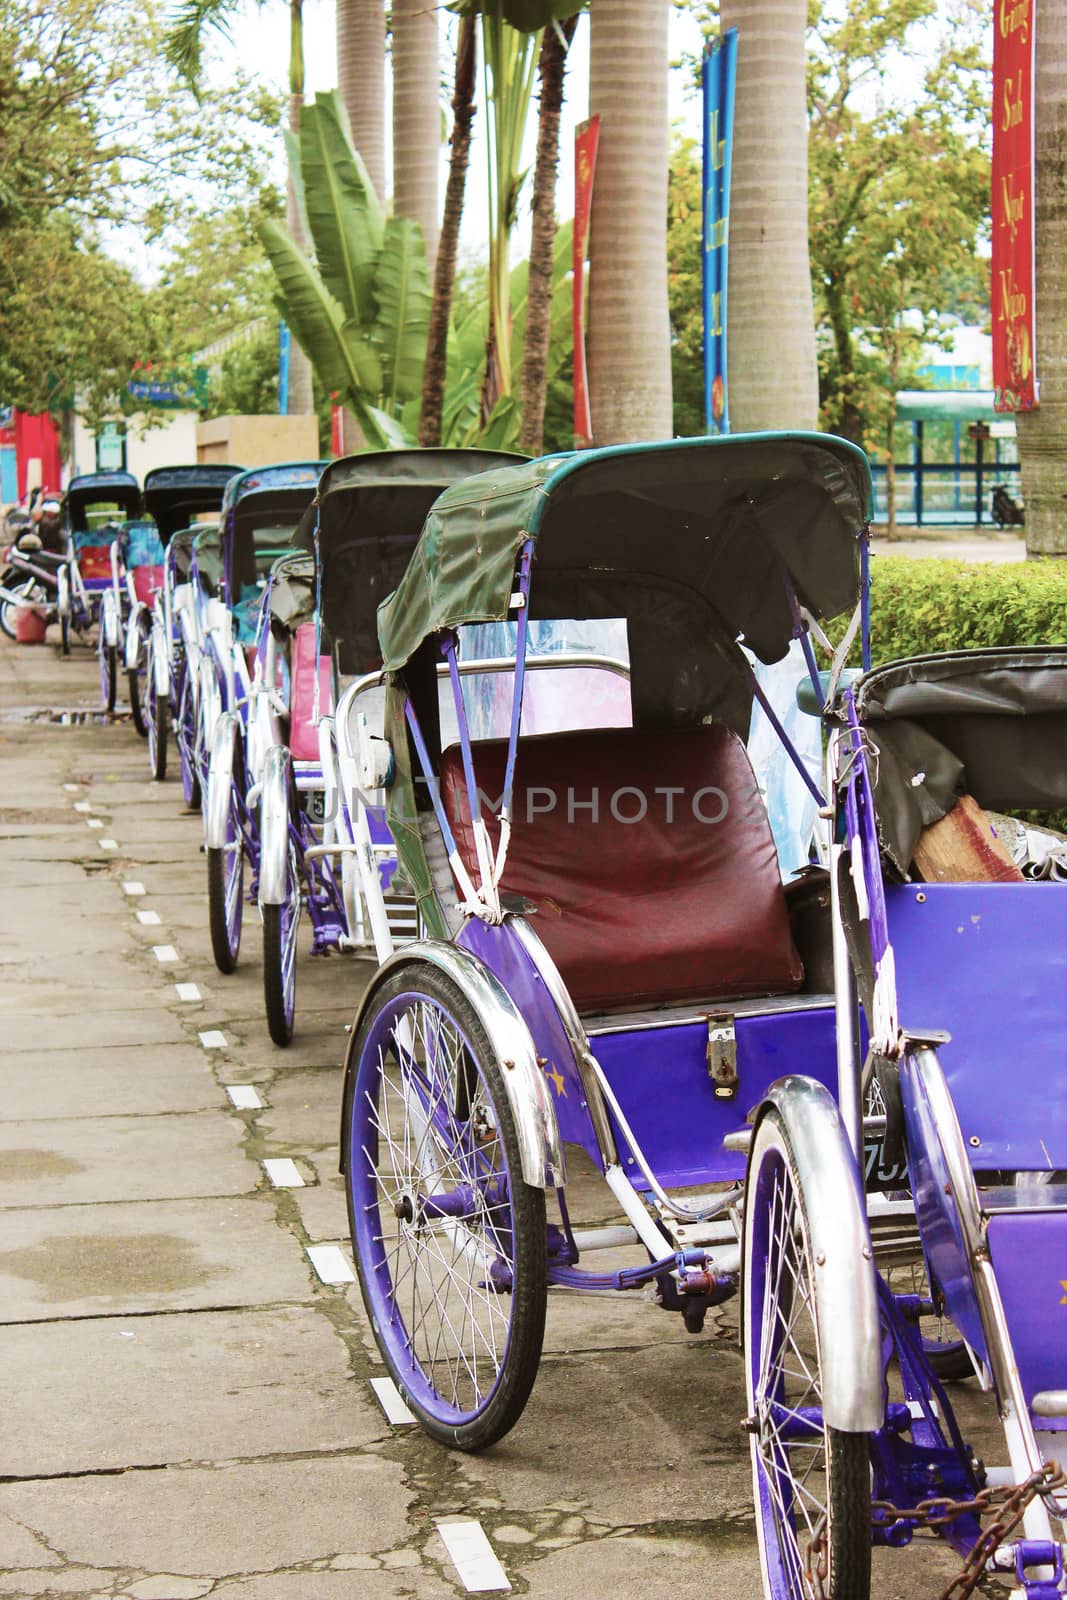 Traditoinal rickshaws in Hue, Vietnam by tboyajiev